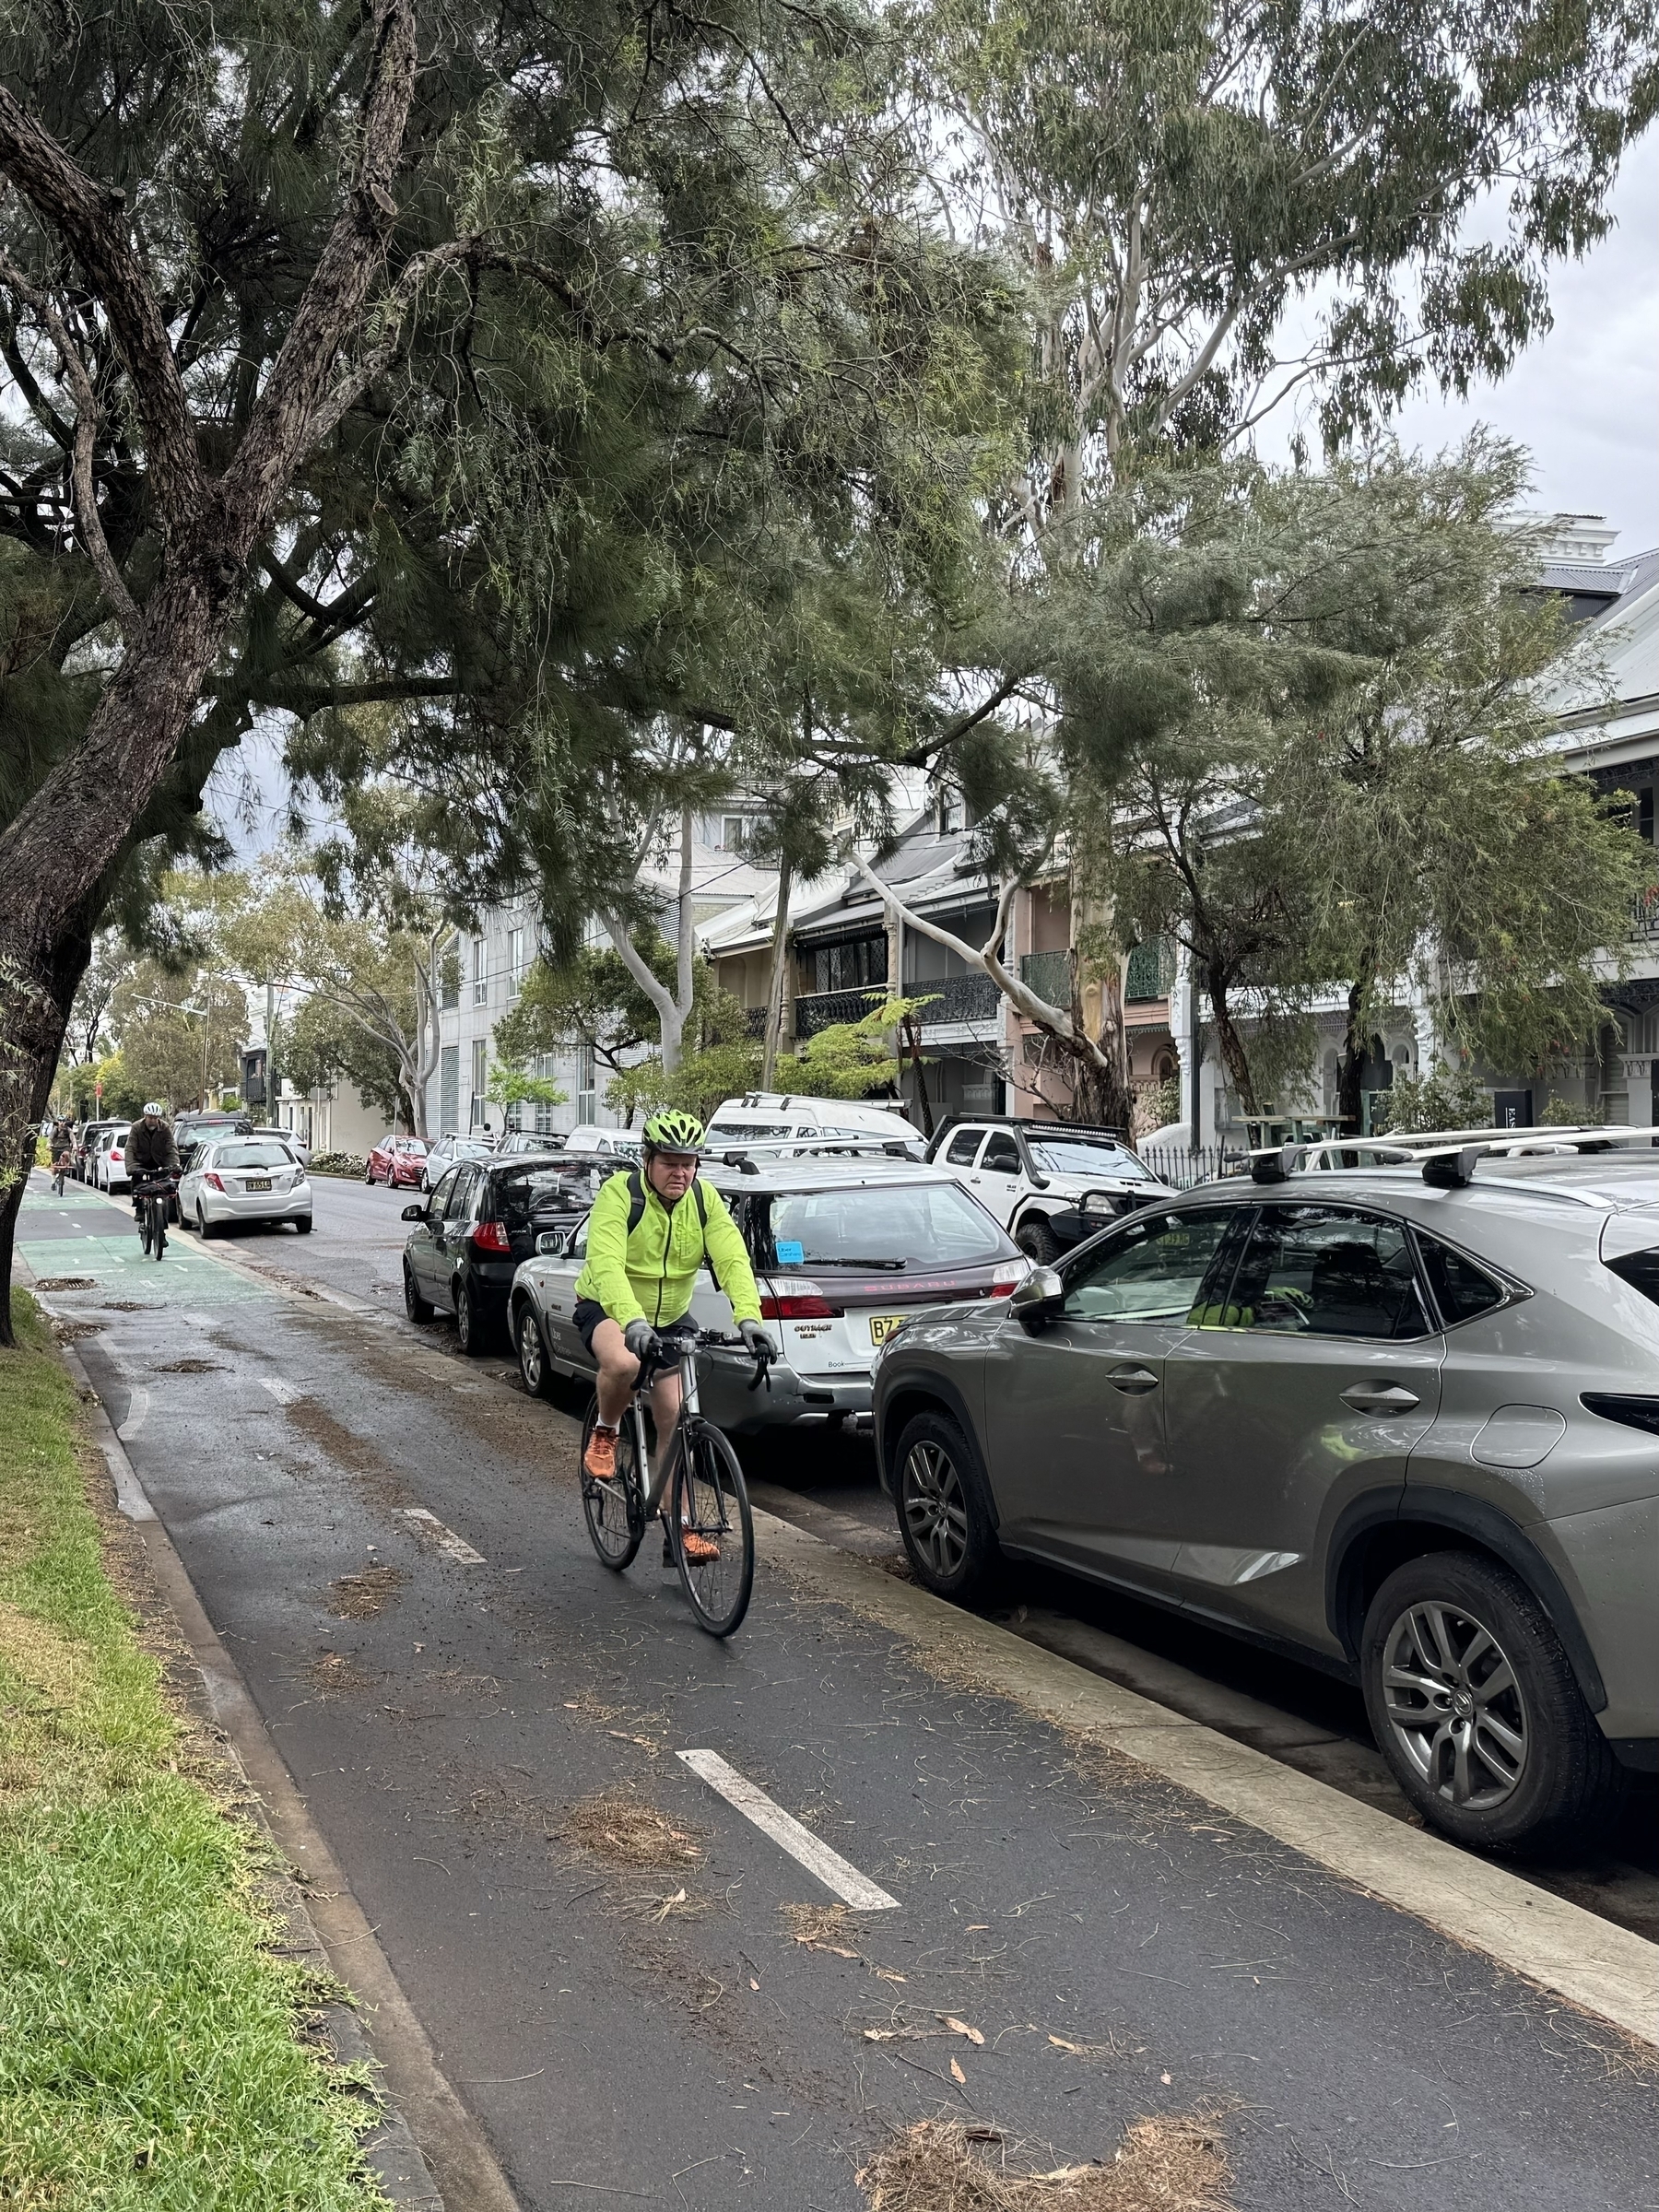 Cyclists riding along the bike path towards Redfern station